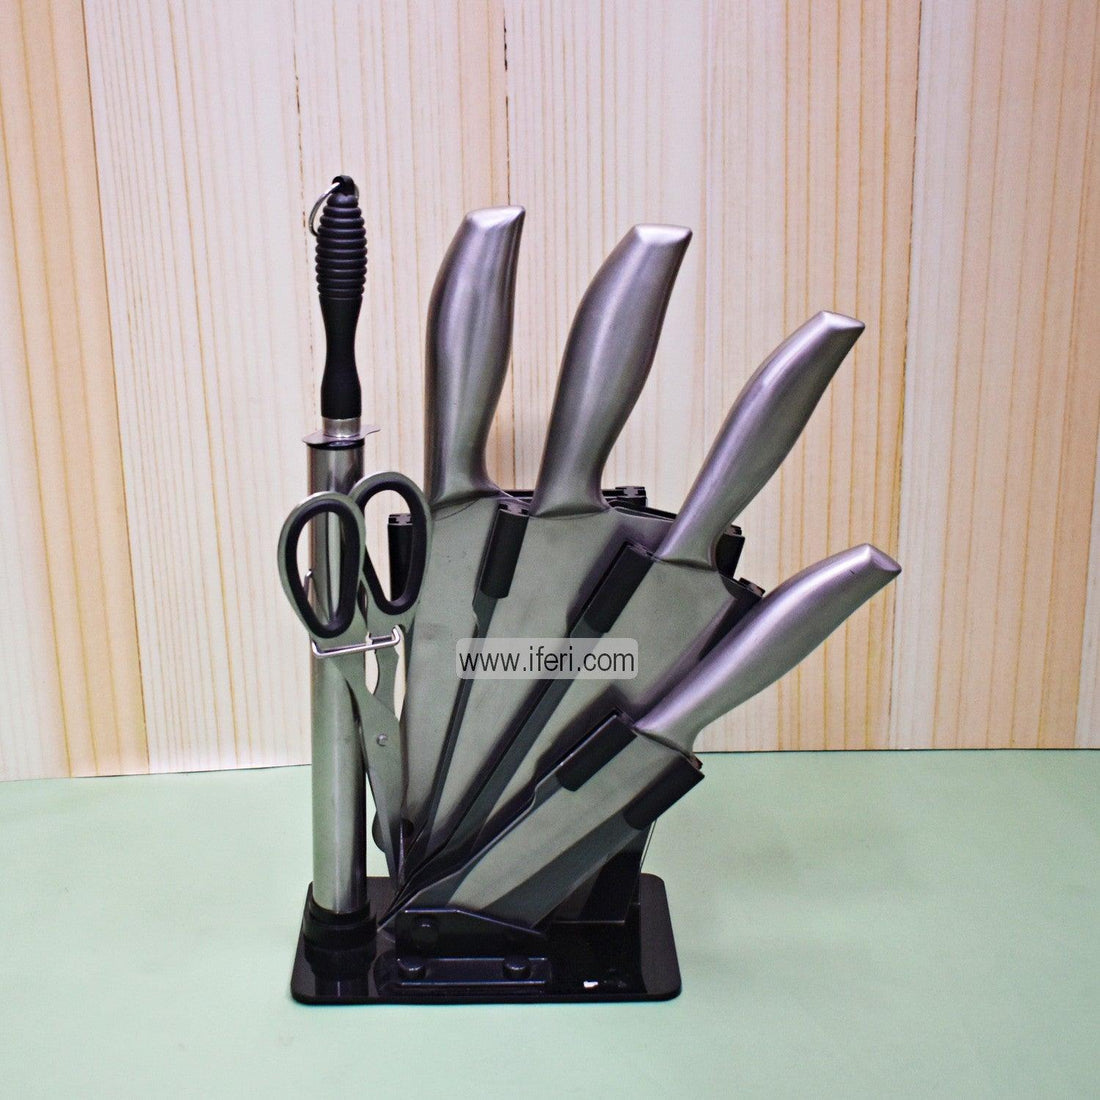 6 Pcs Knife Set with Holder TG2068 Price in Bangladesh - iferi.com